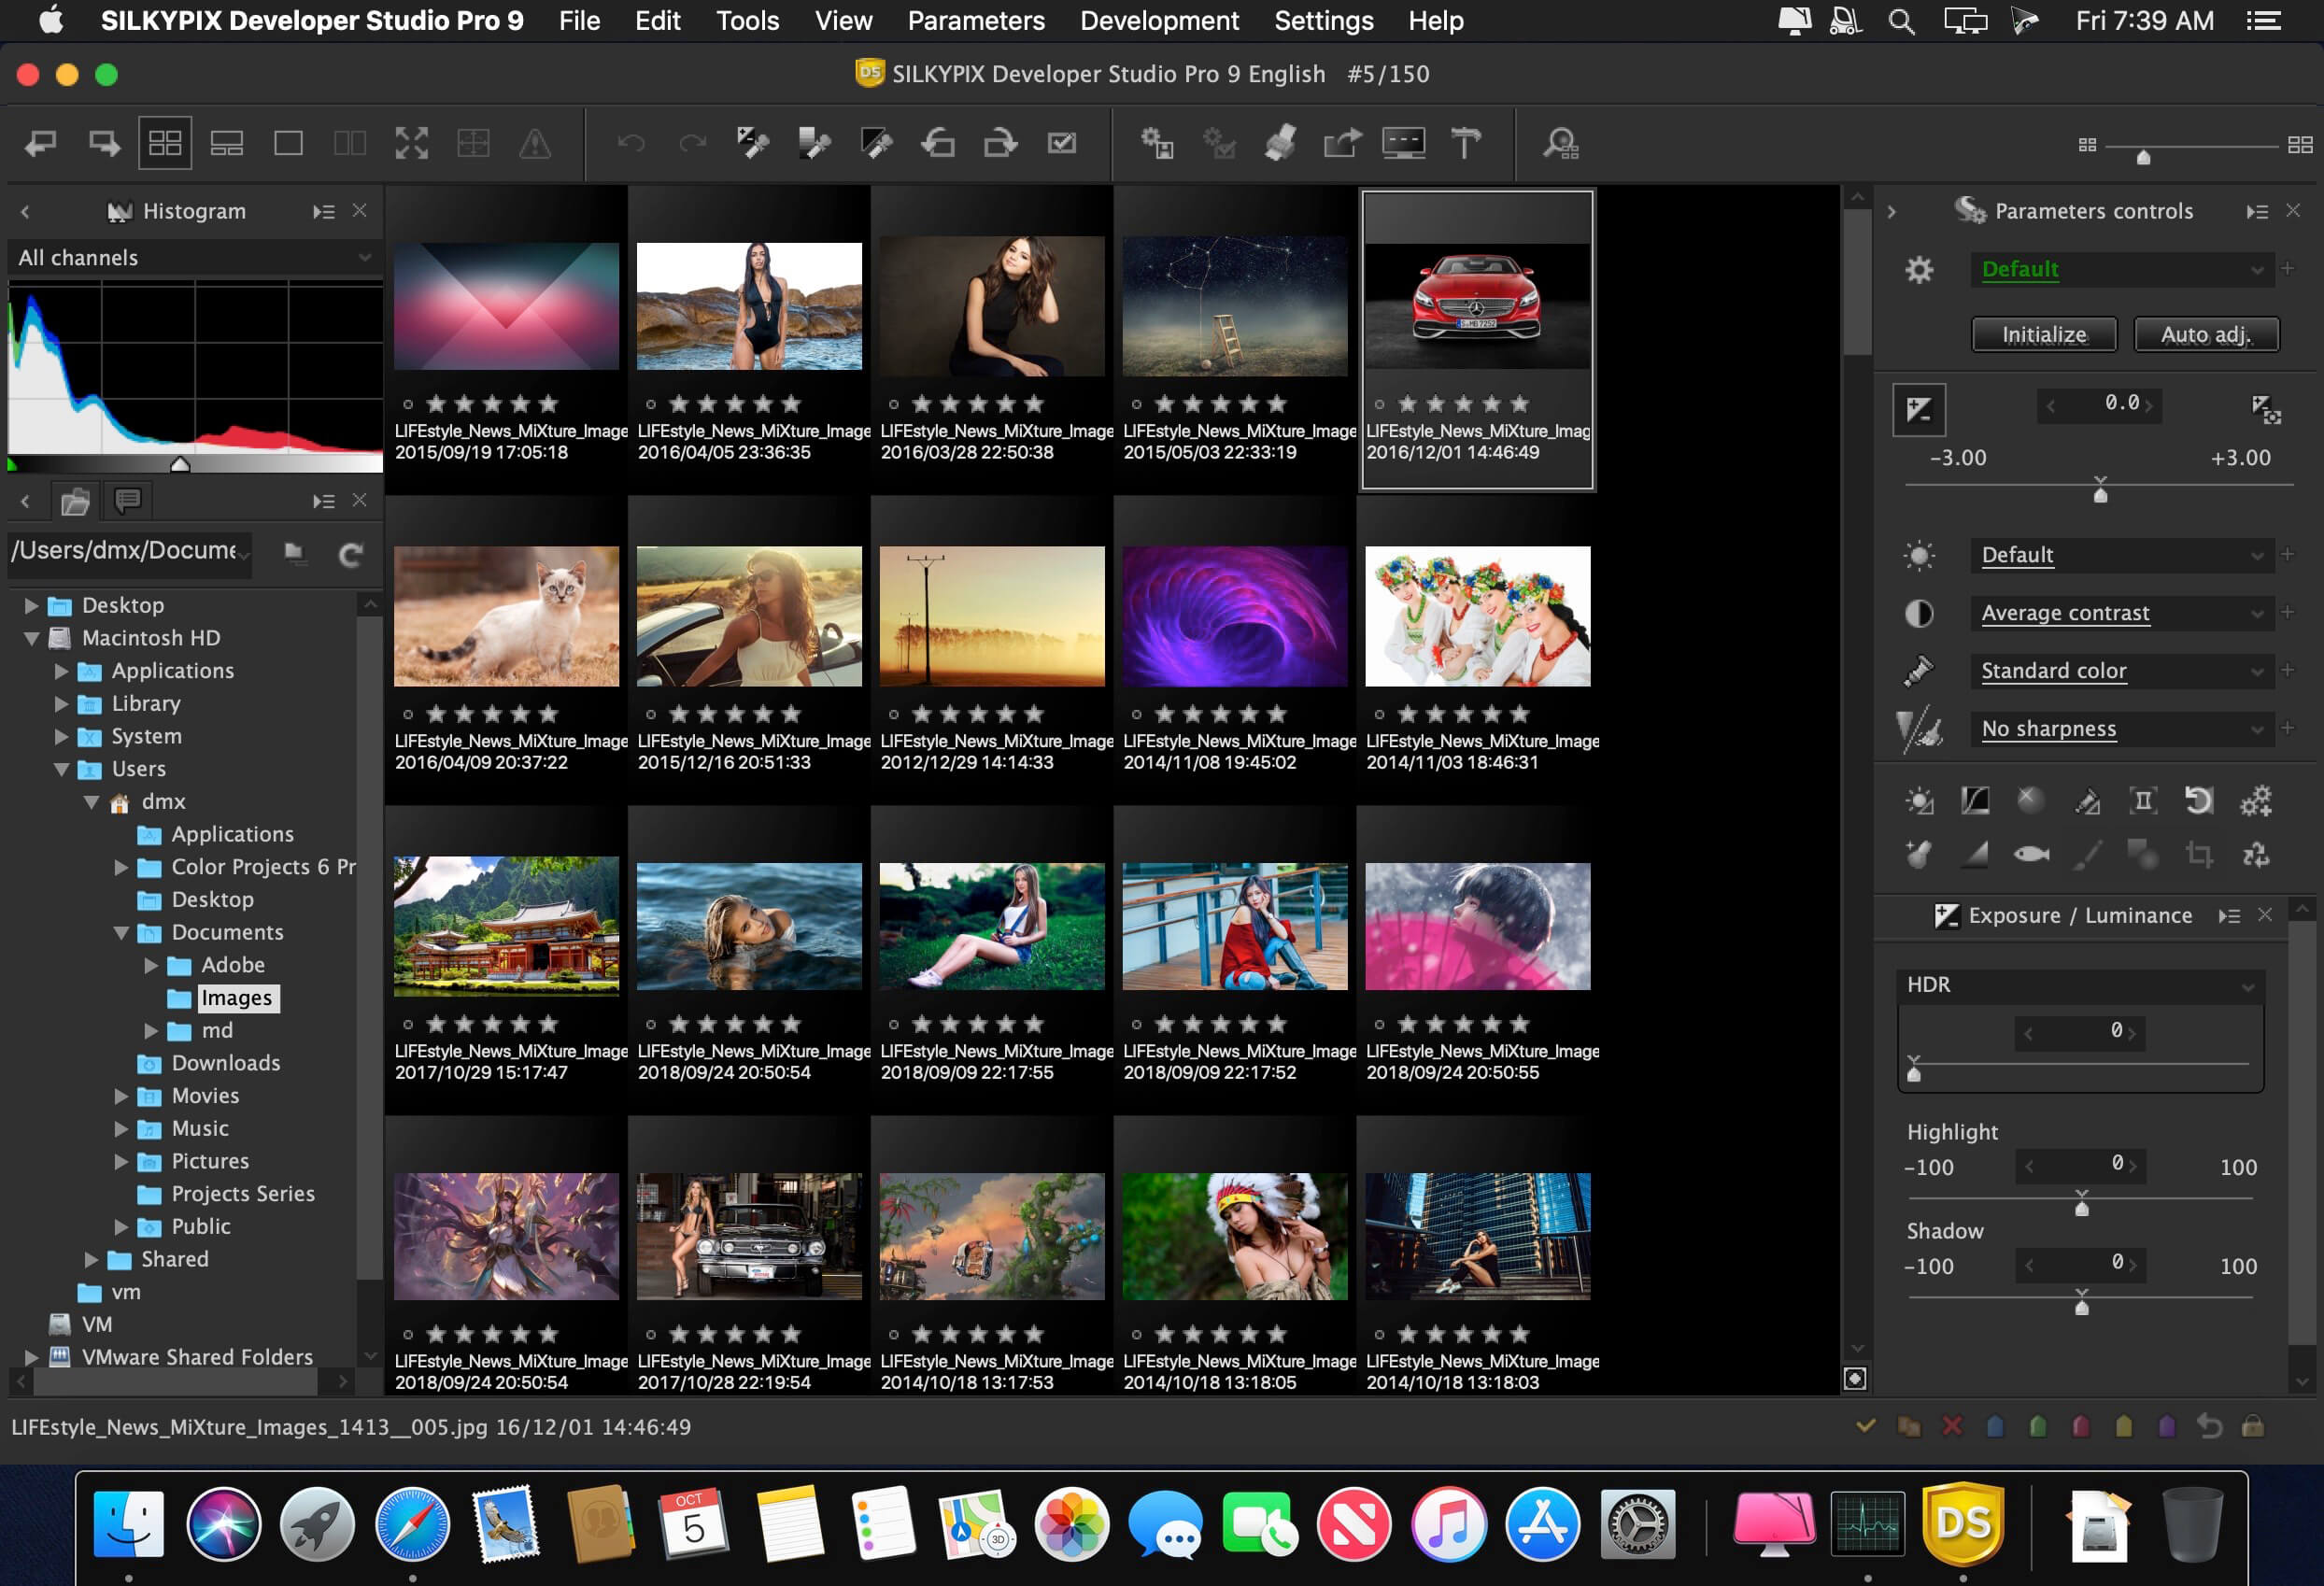 SILKYPIX Developer Studio Pro 11.0.10.0 instal the new version for ipod